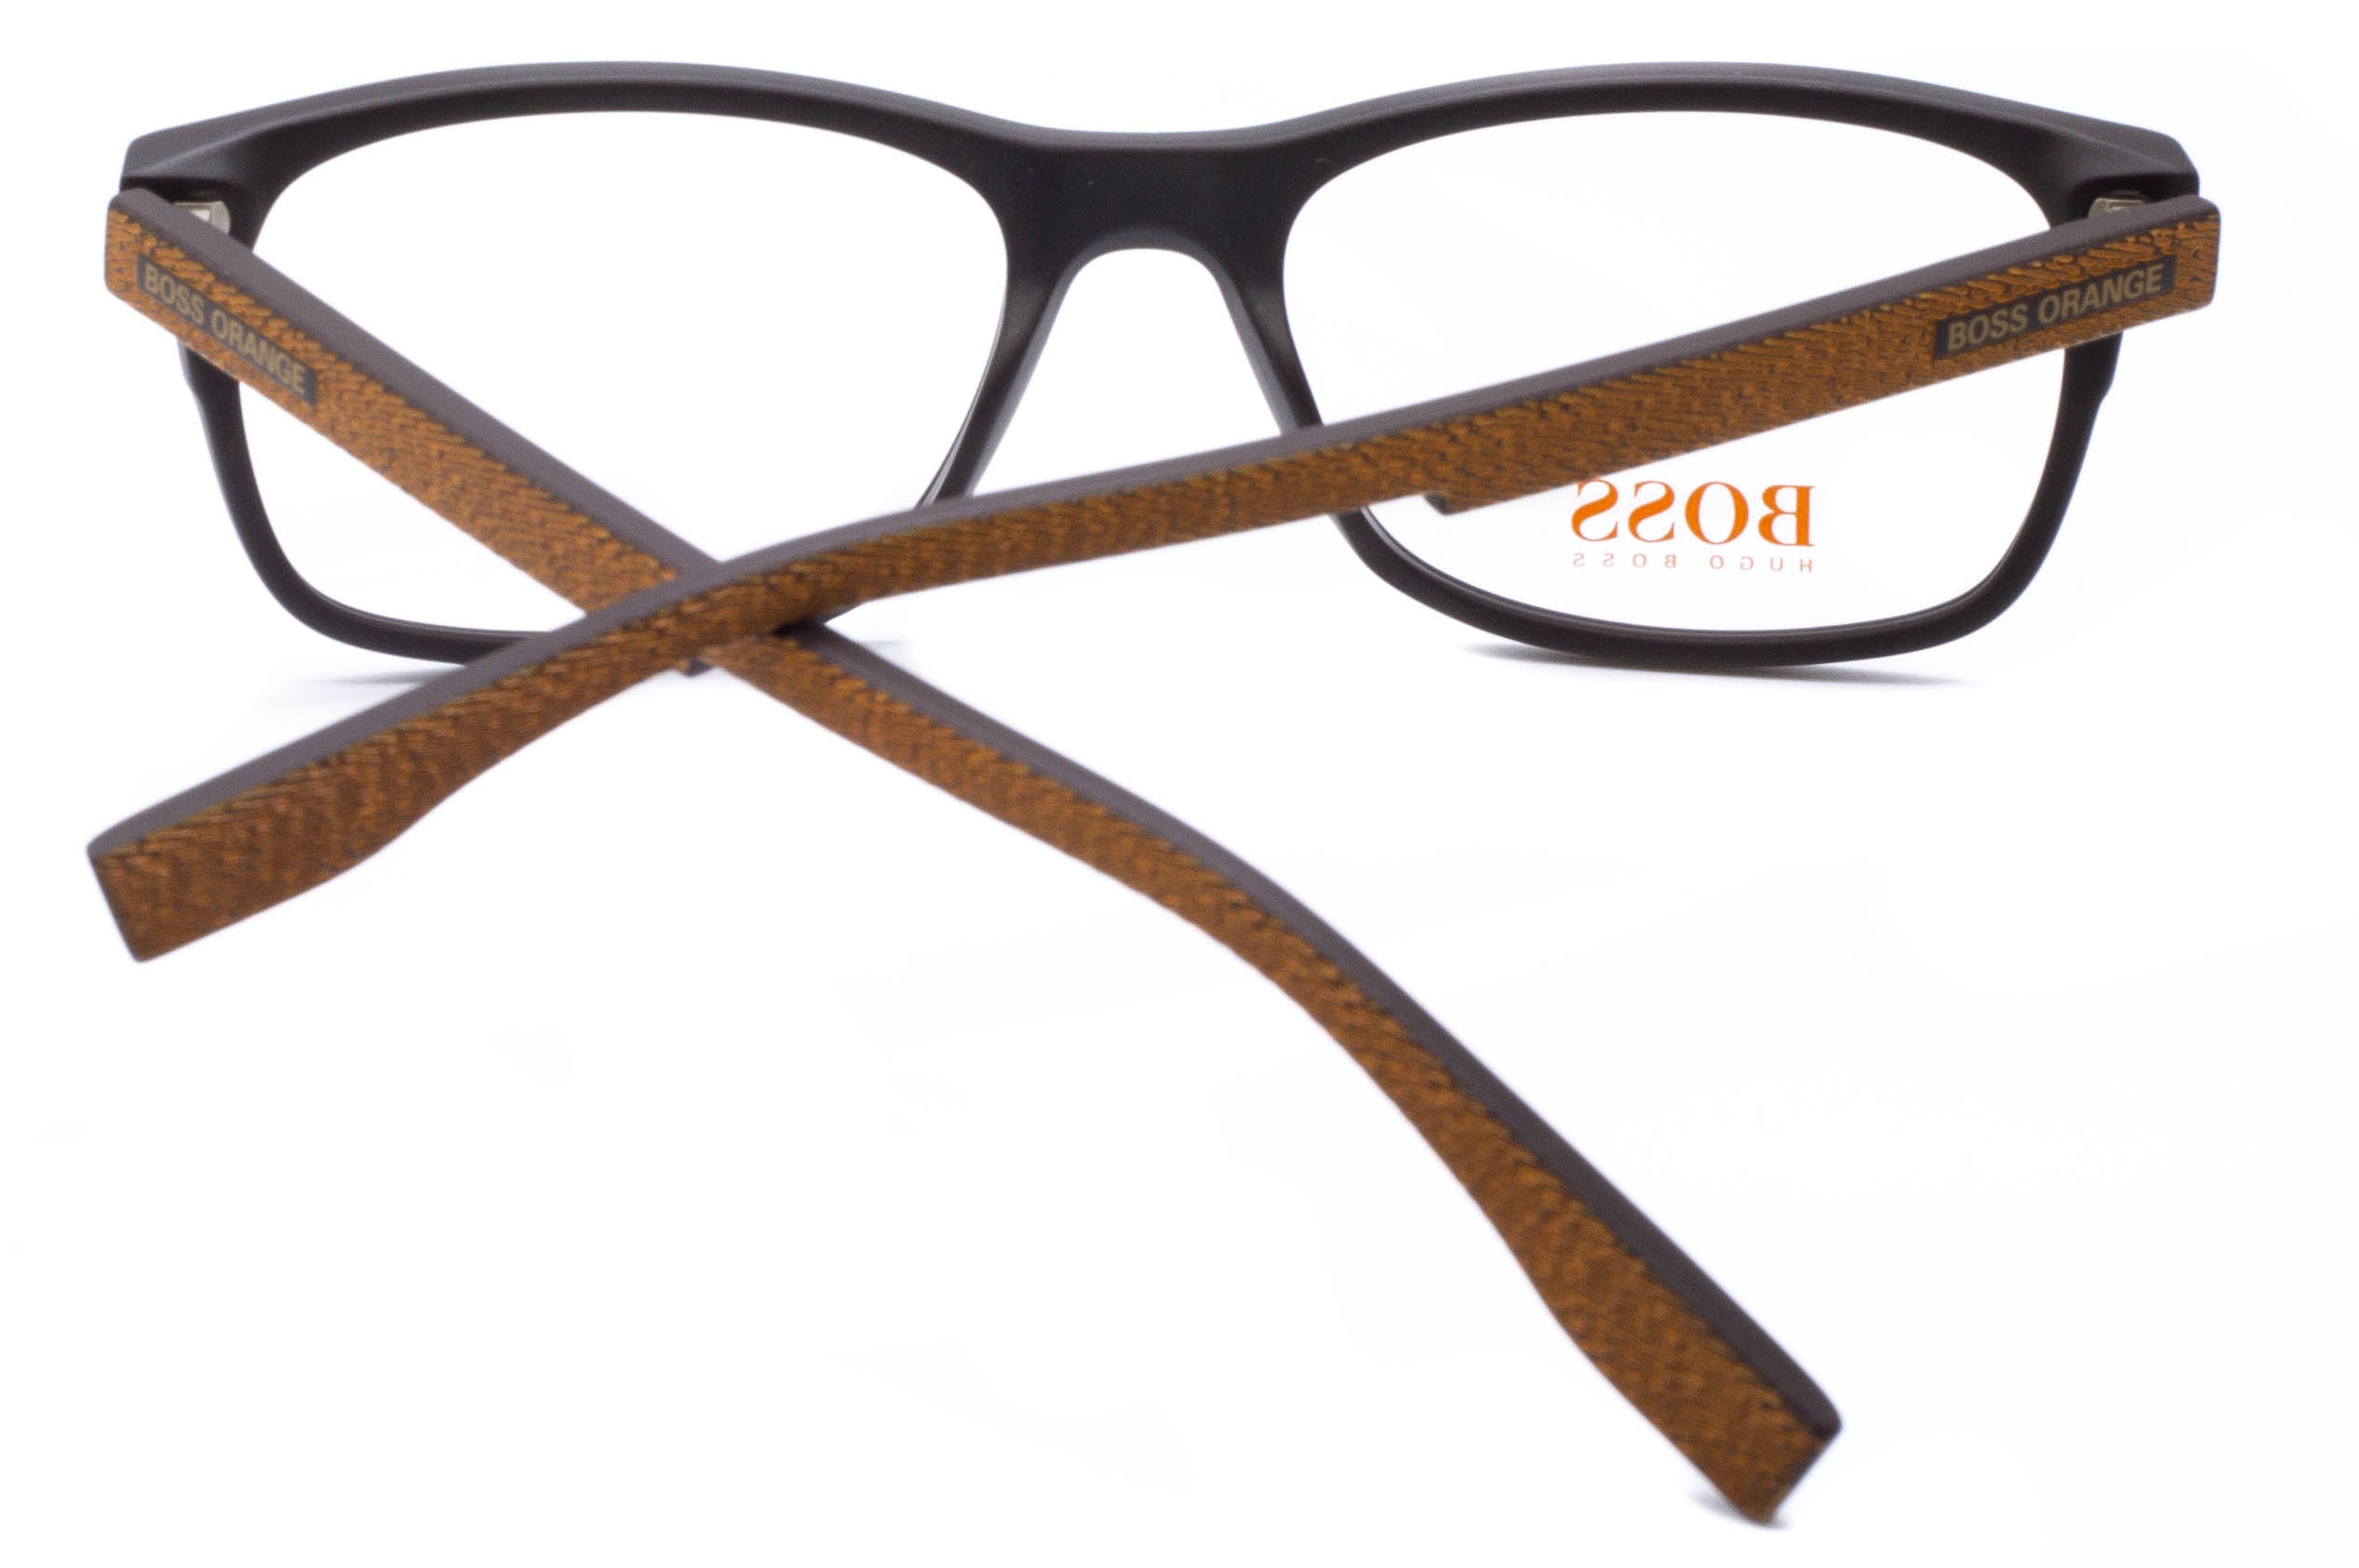 BOSS ORANGE BO 0292 09Q 52mm Eyewear FRAMES Glasses RX Optical Eyeglasses - New